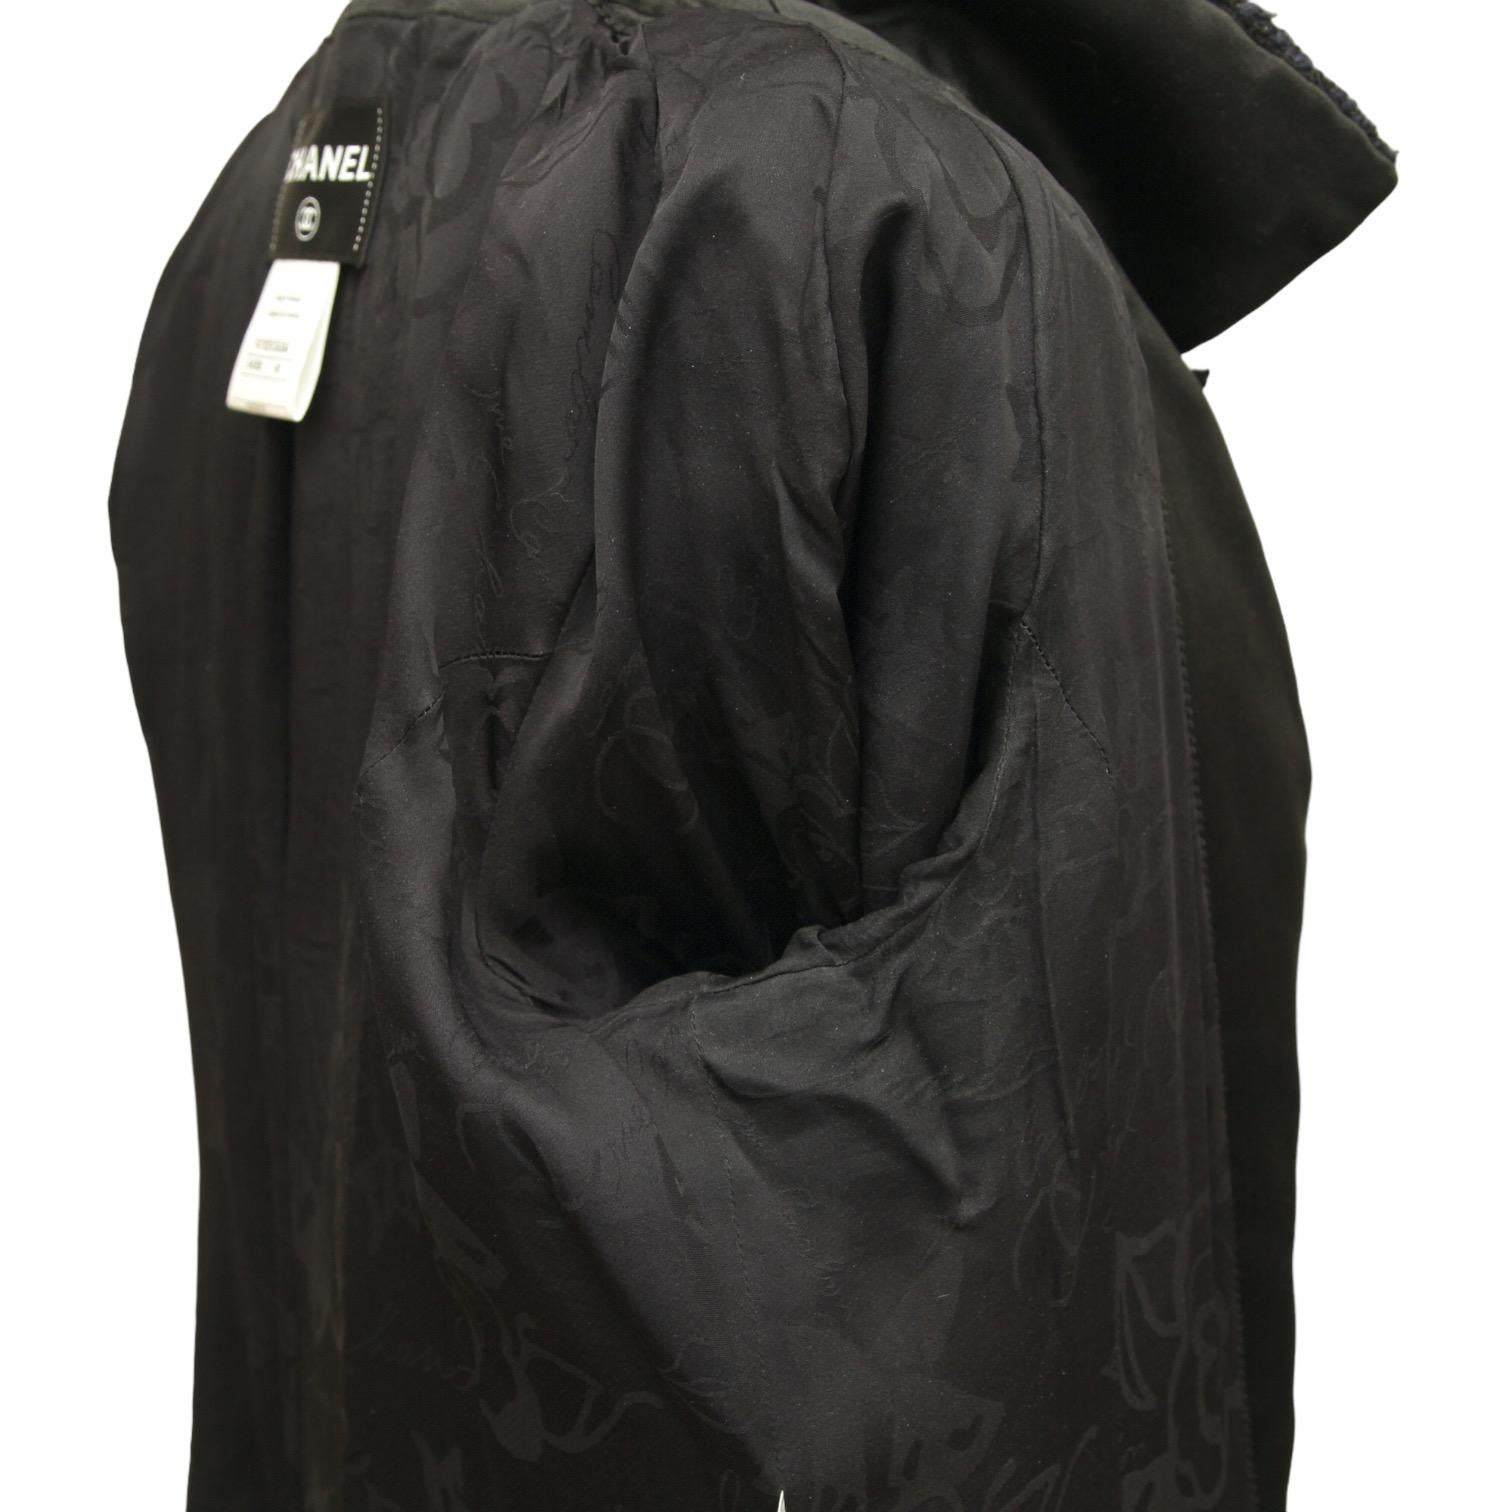 CHANEL  Black Jacket Tweed Wool Braided Gunmetal Buttons Pockets 40 2013 RUNWAY 9